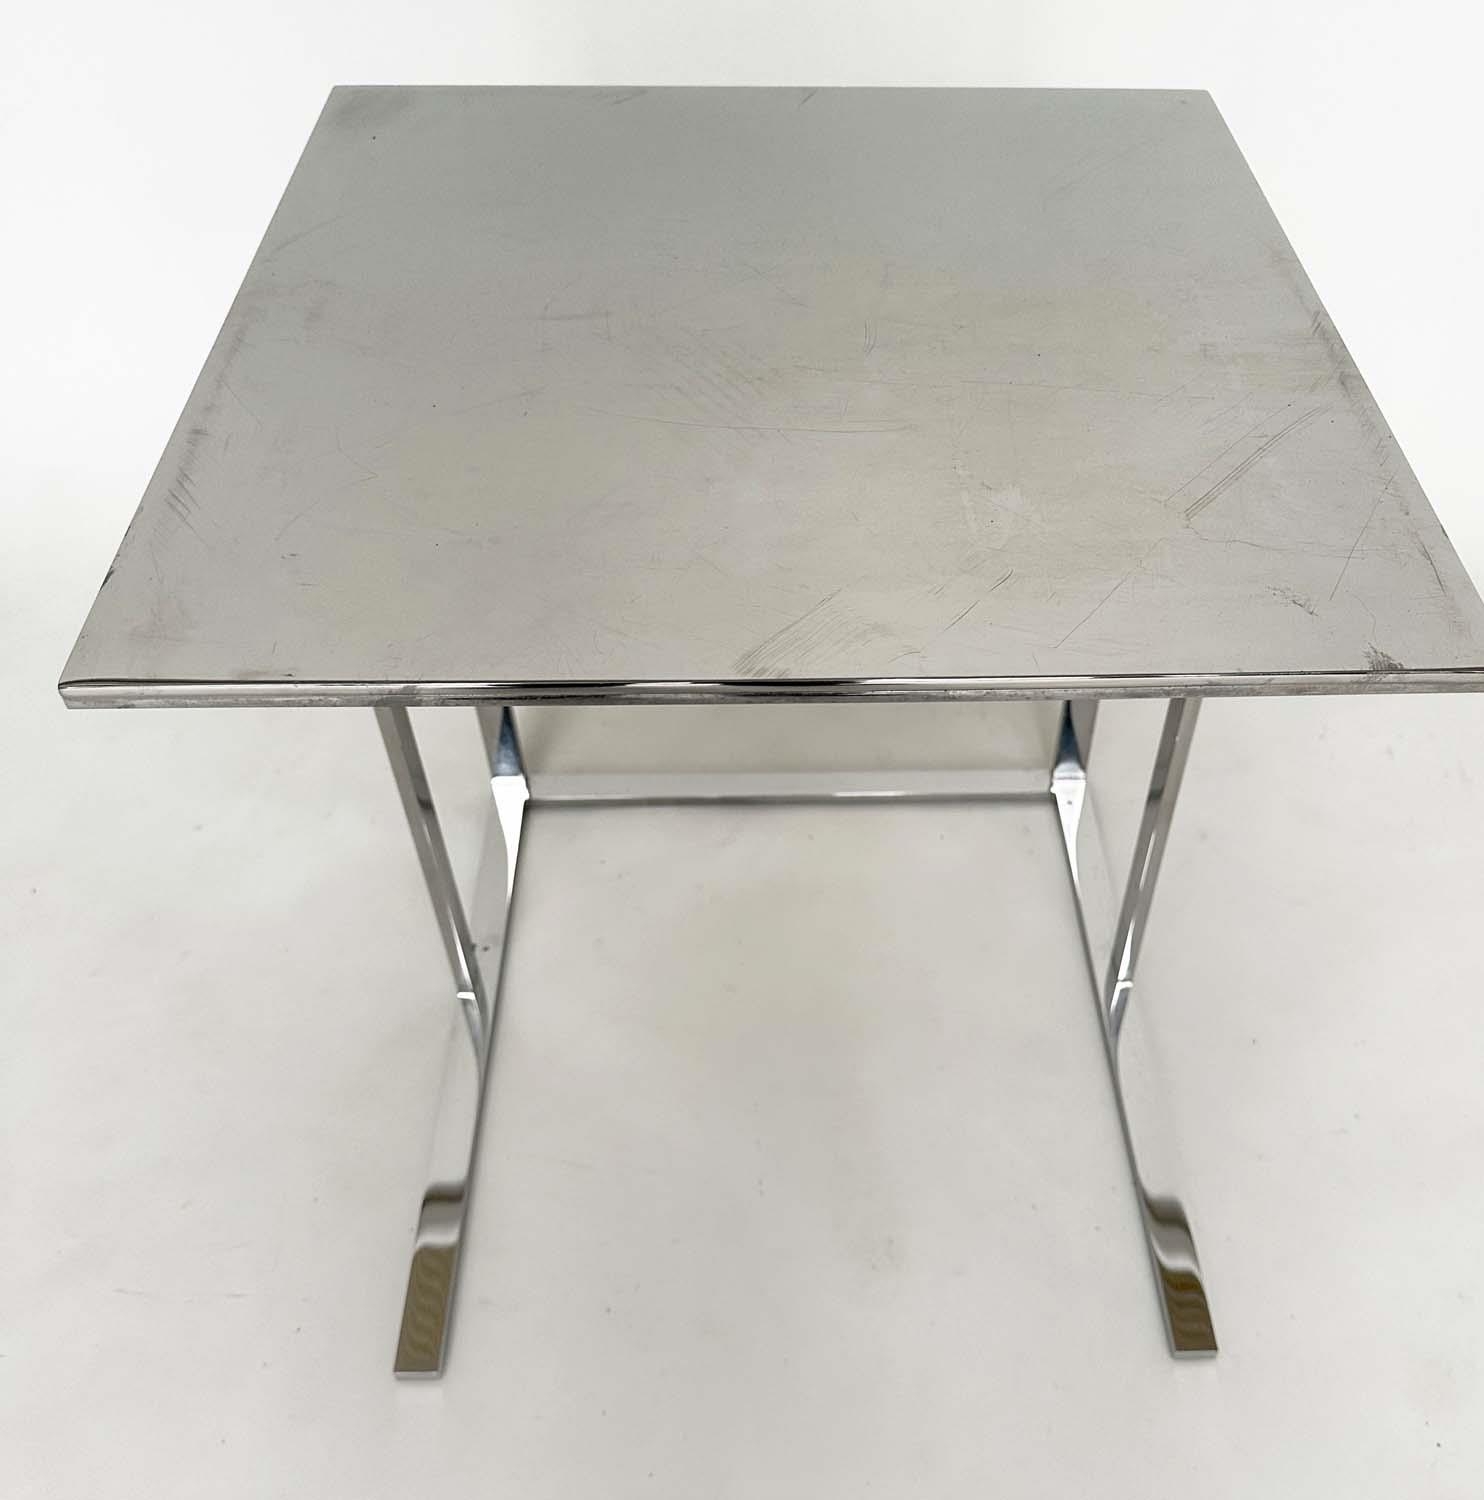 B&B ITALIA MAXALTO ELLOS TABLES, a pair, by Antonio Citterio with applied label, 52cm H x 46cm W x - Image 3 of 8